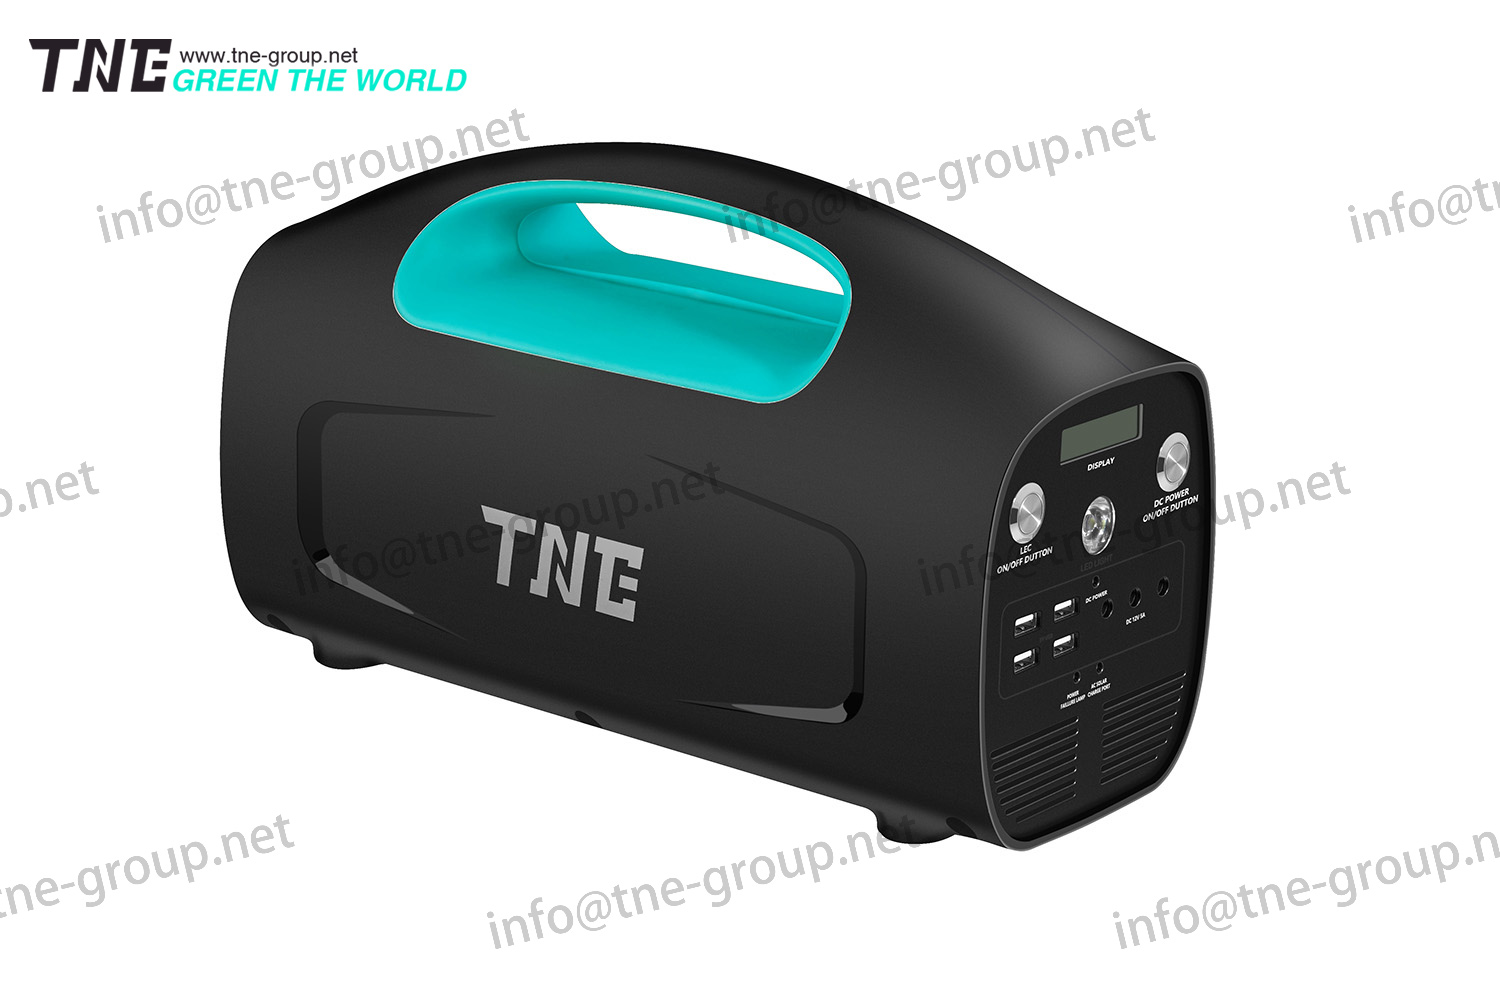 TNE for Smart Solar Online Portable Generator Power Bank UPS System